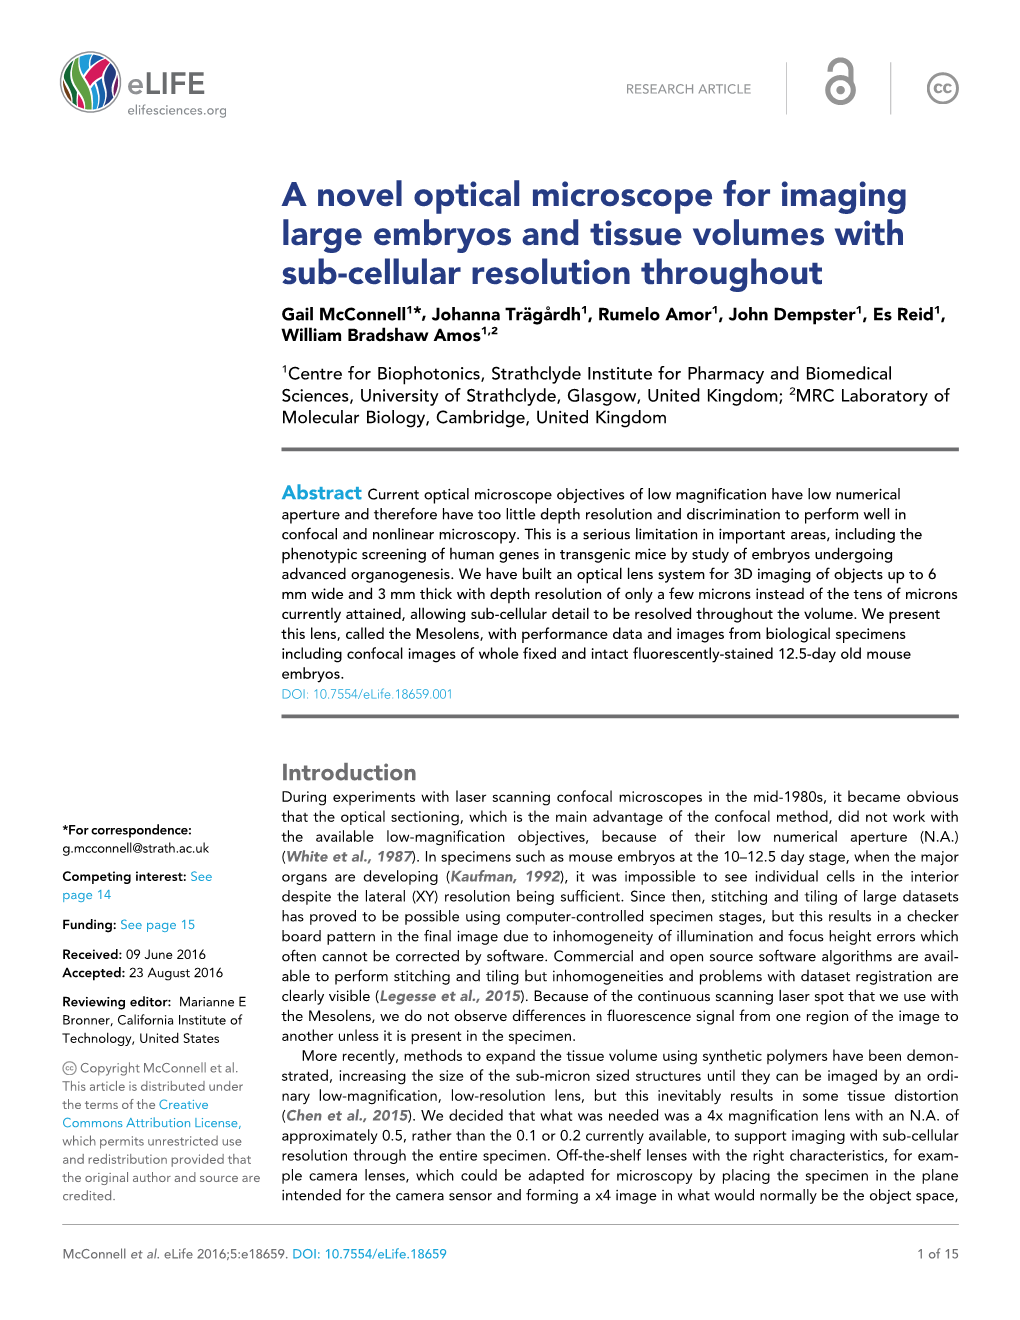 A Novel Optical Microscope for Imaging Large